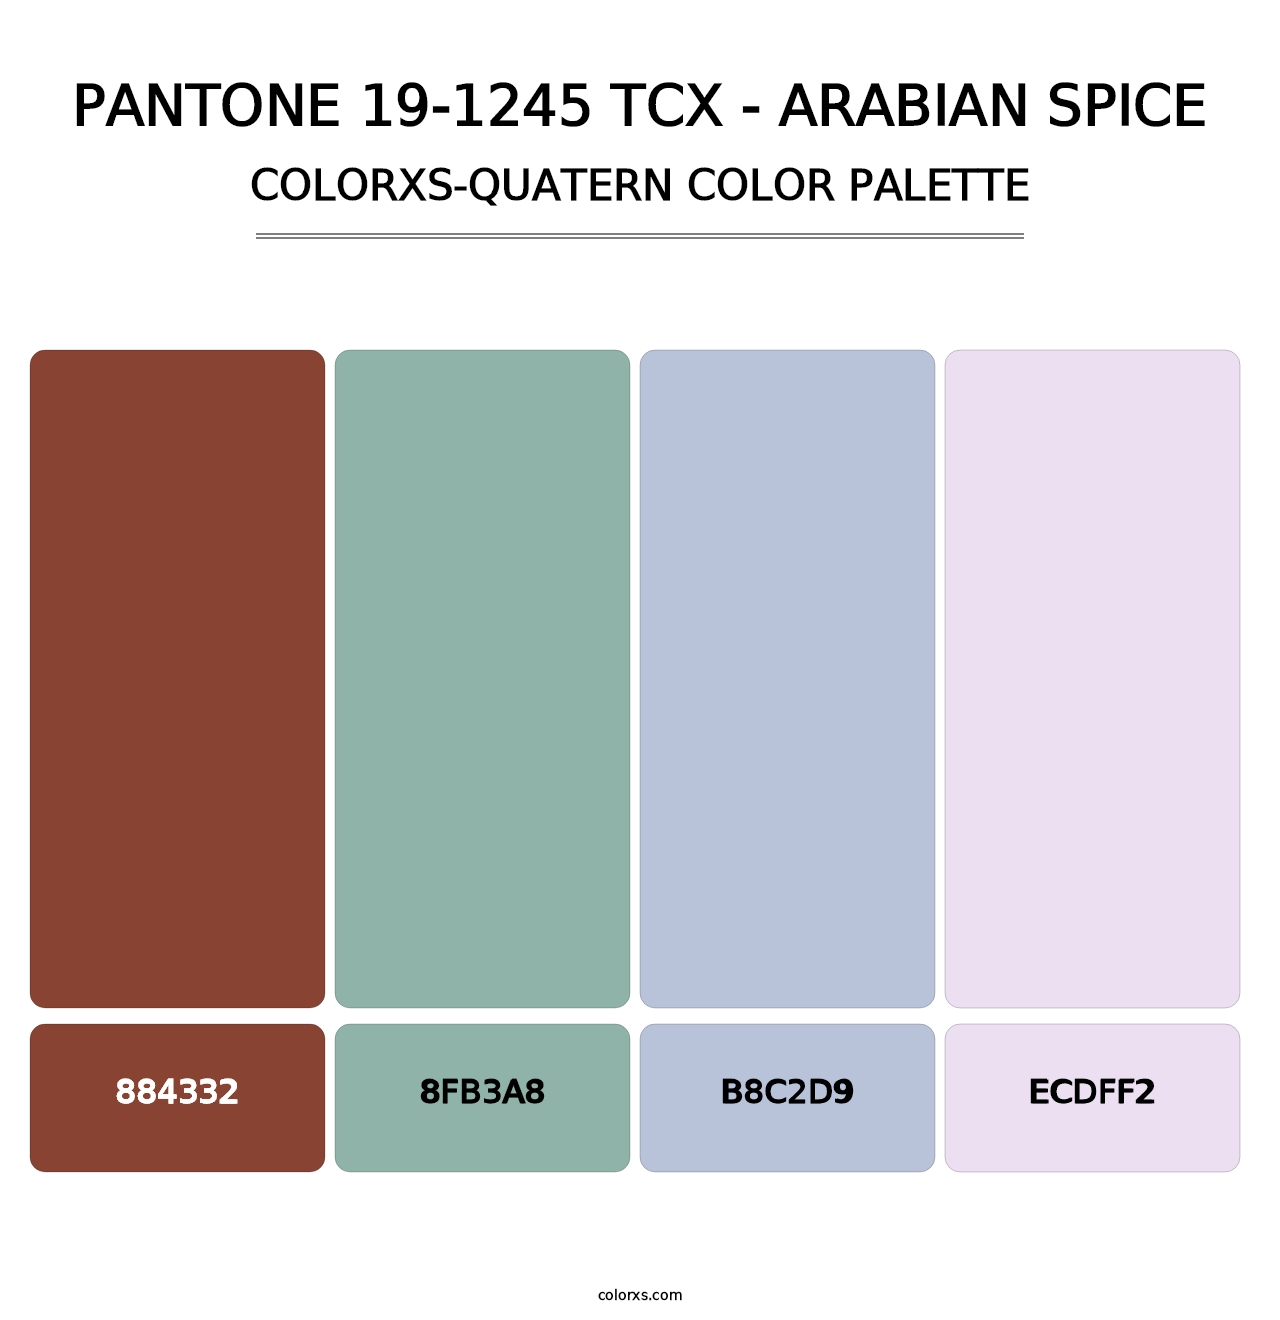 PANTONE 19-1245 TCX - Arabian Spice - Colorxs Quatern Palette